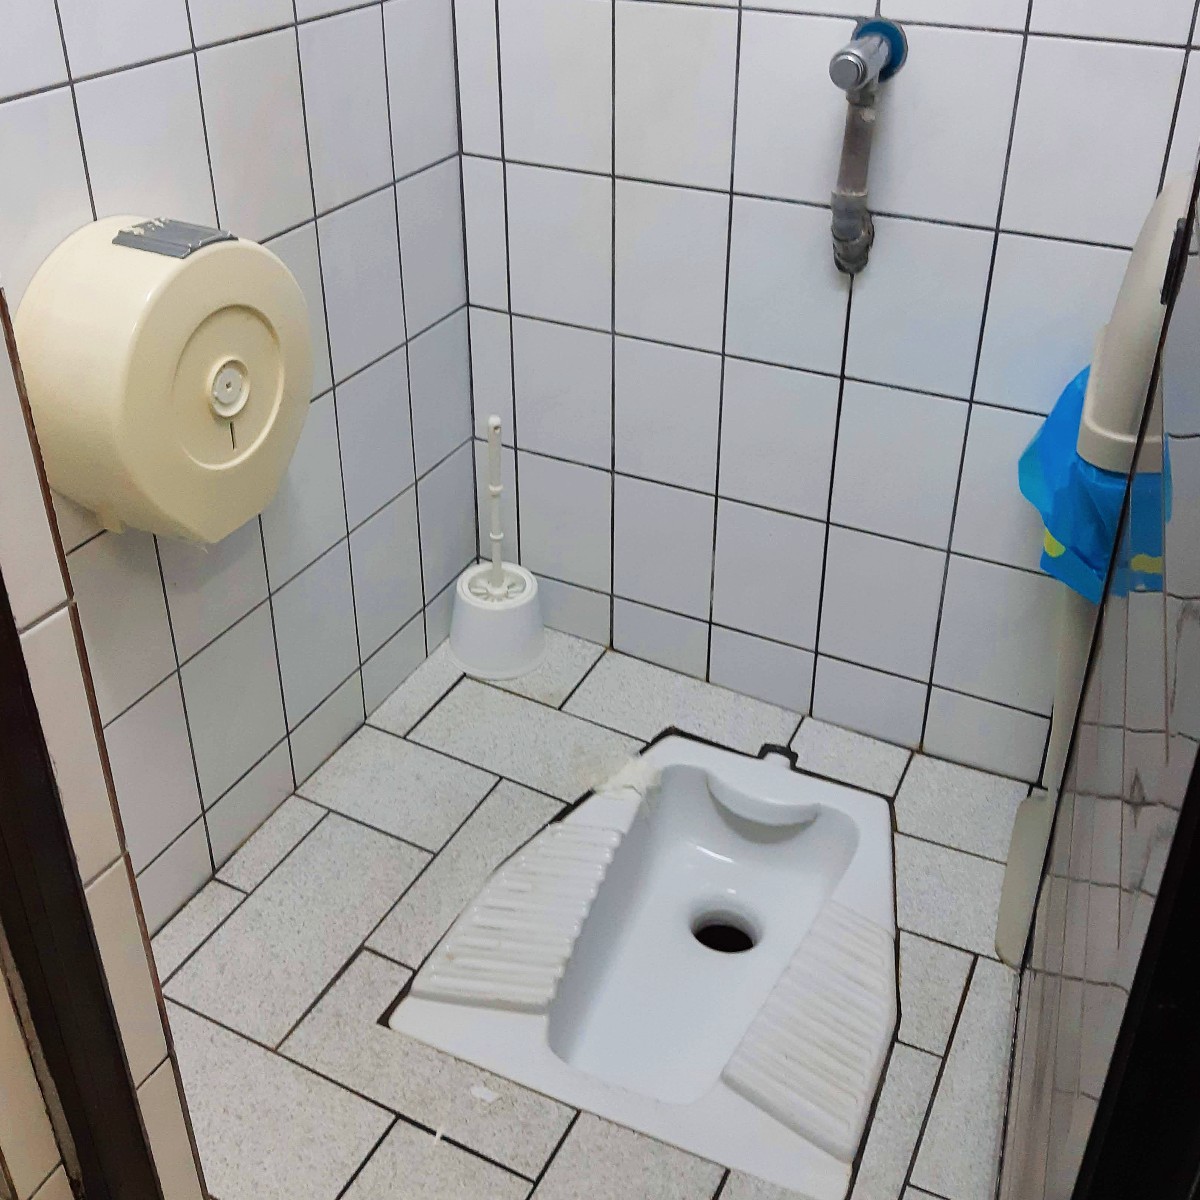 A squat toilet in Greece